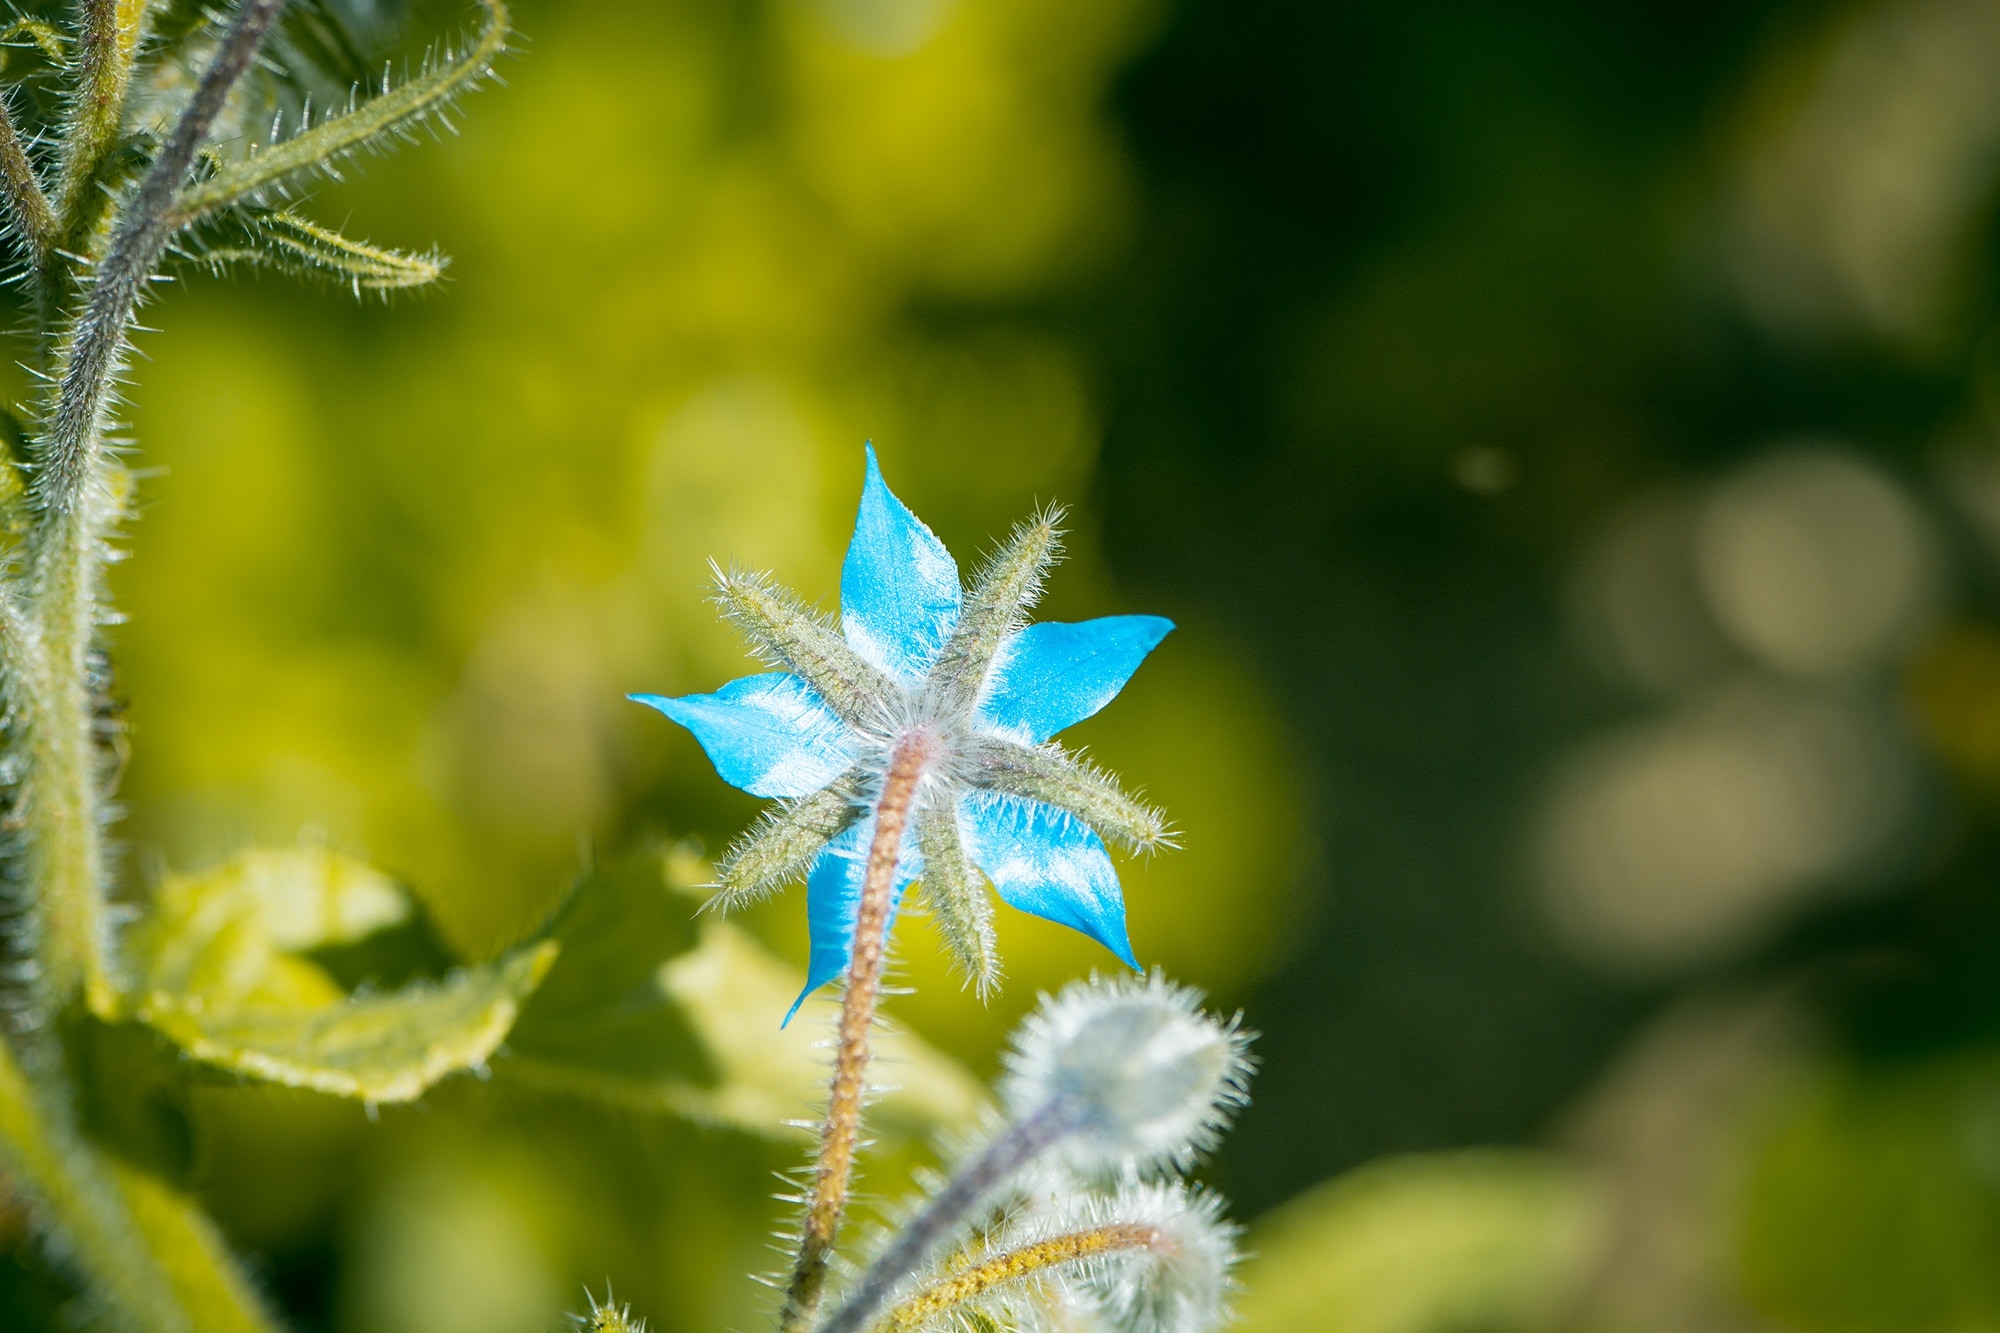 blue 5 petaled flower